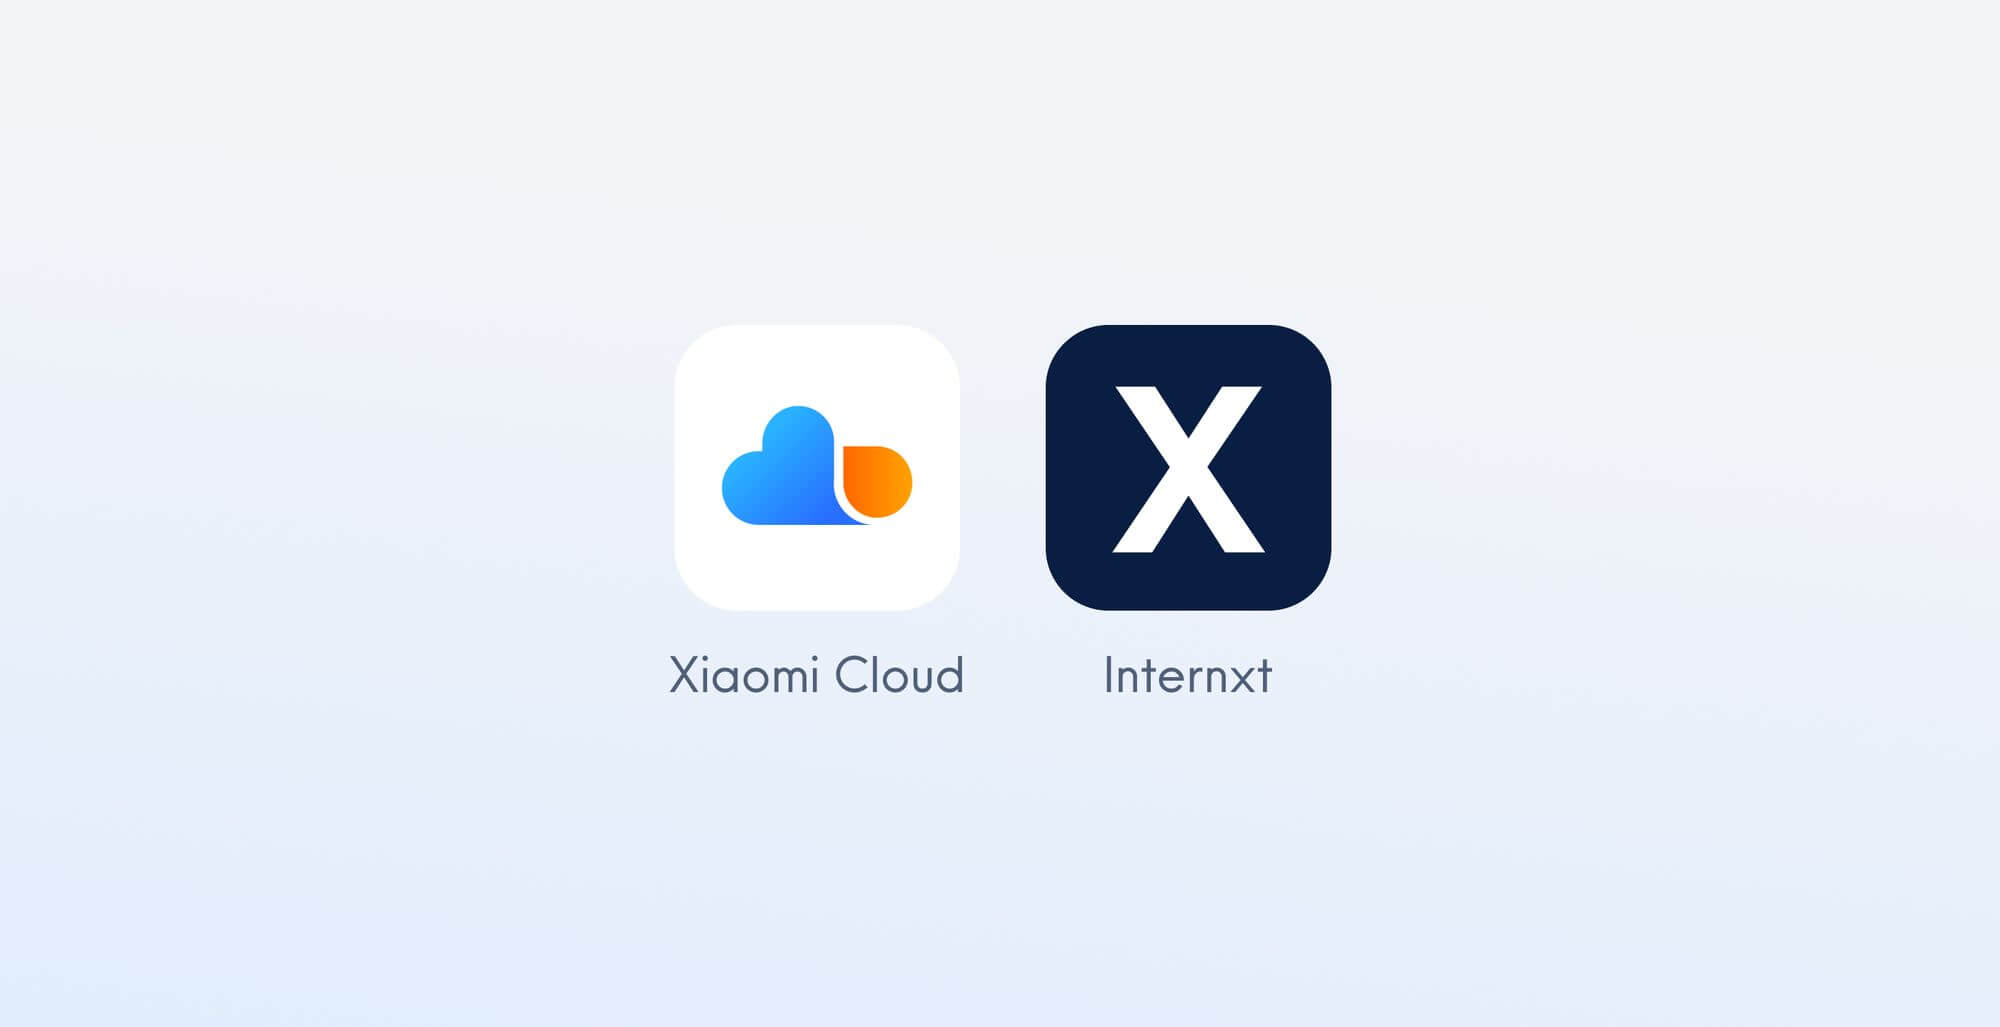 Internxt logo and Xiaomi Cloud logo